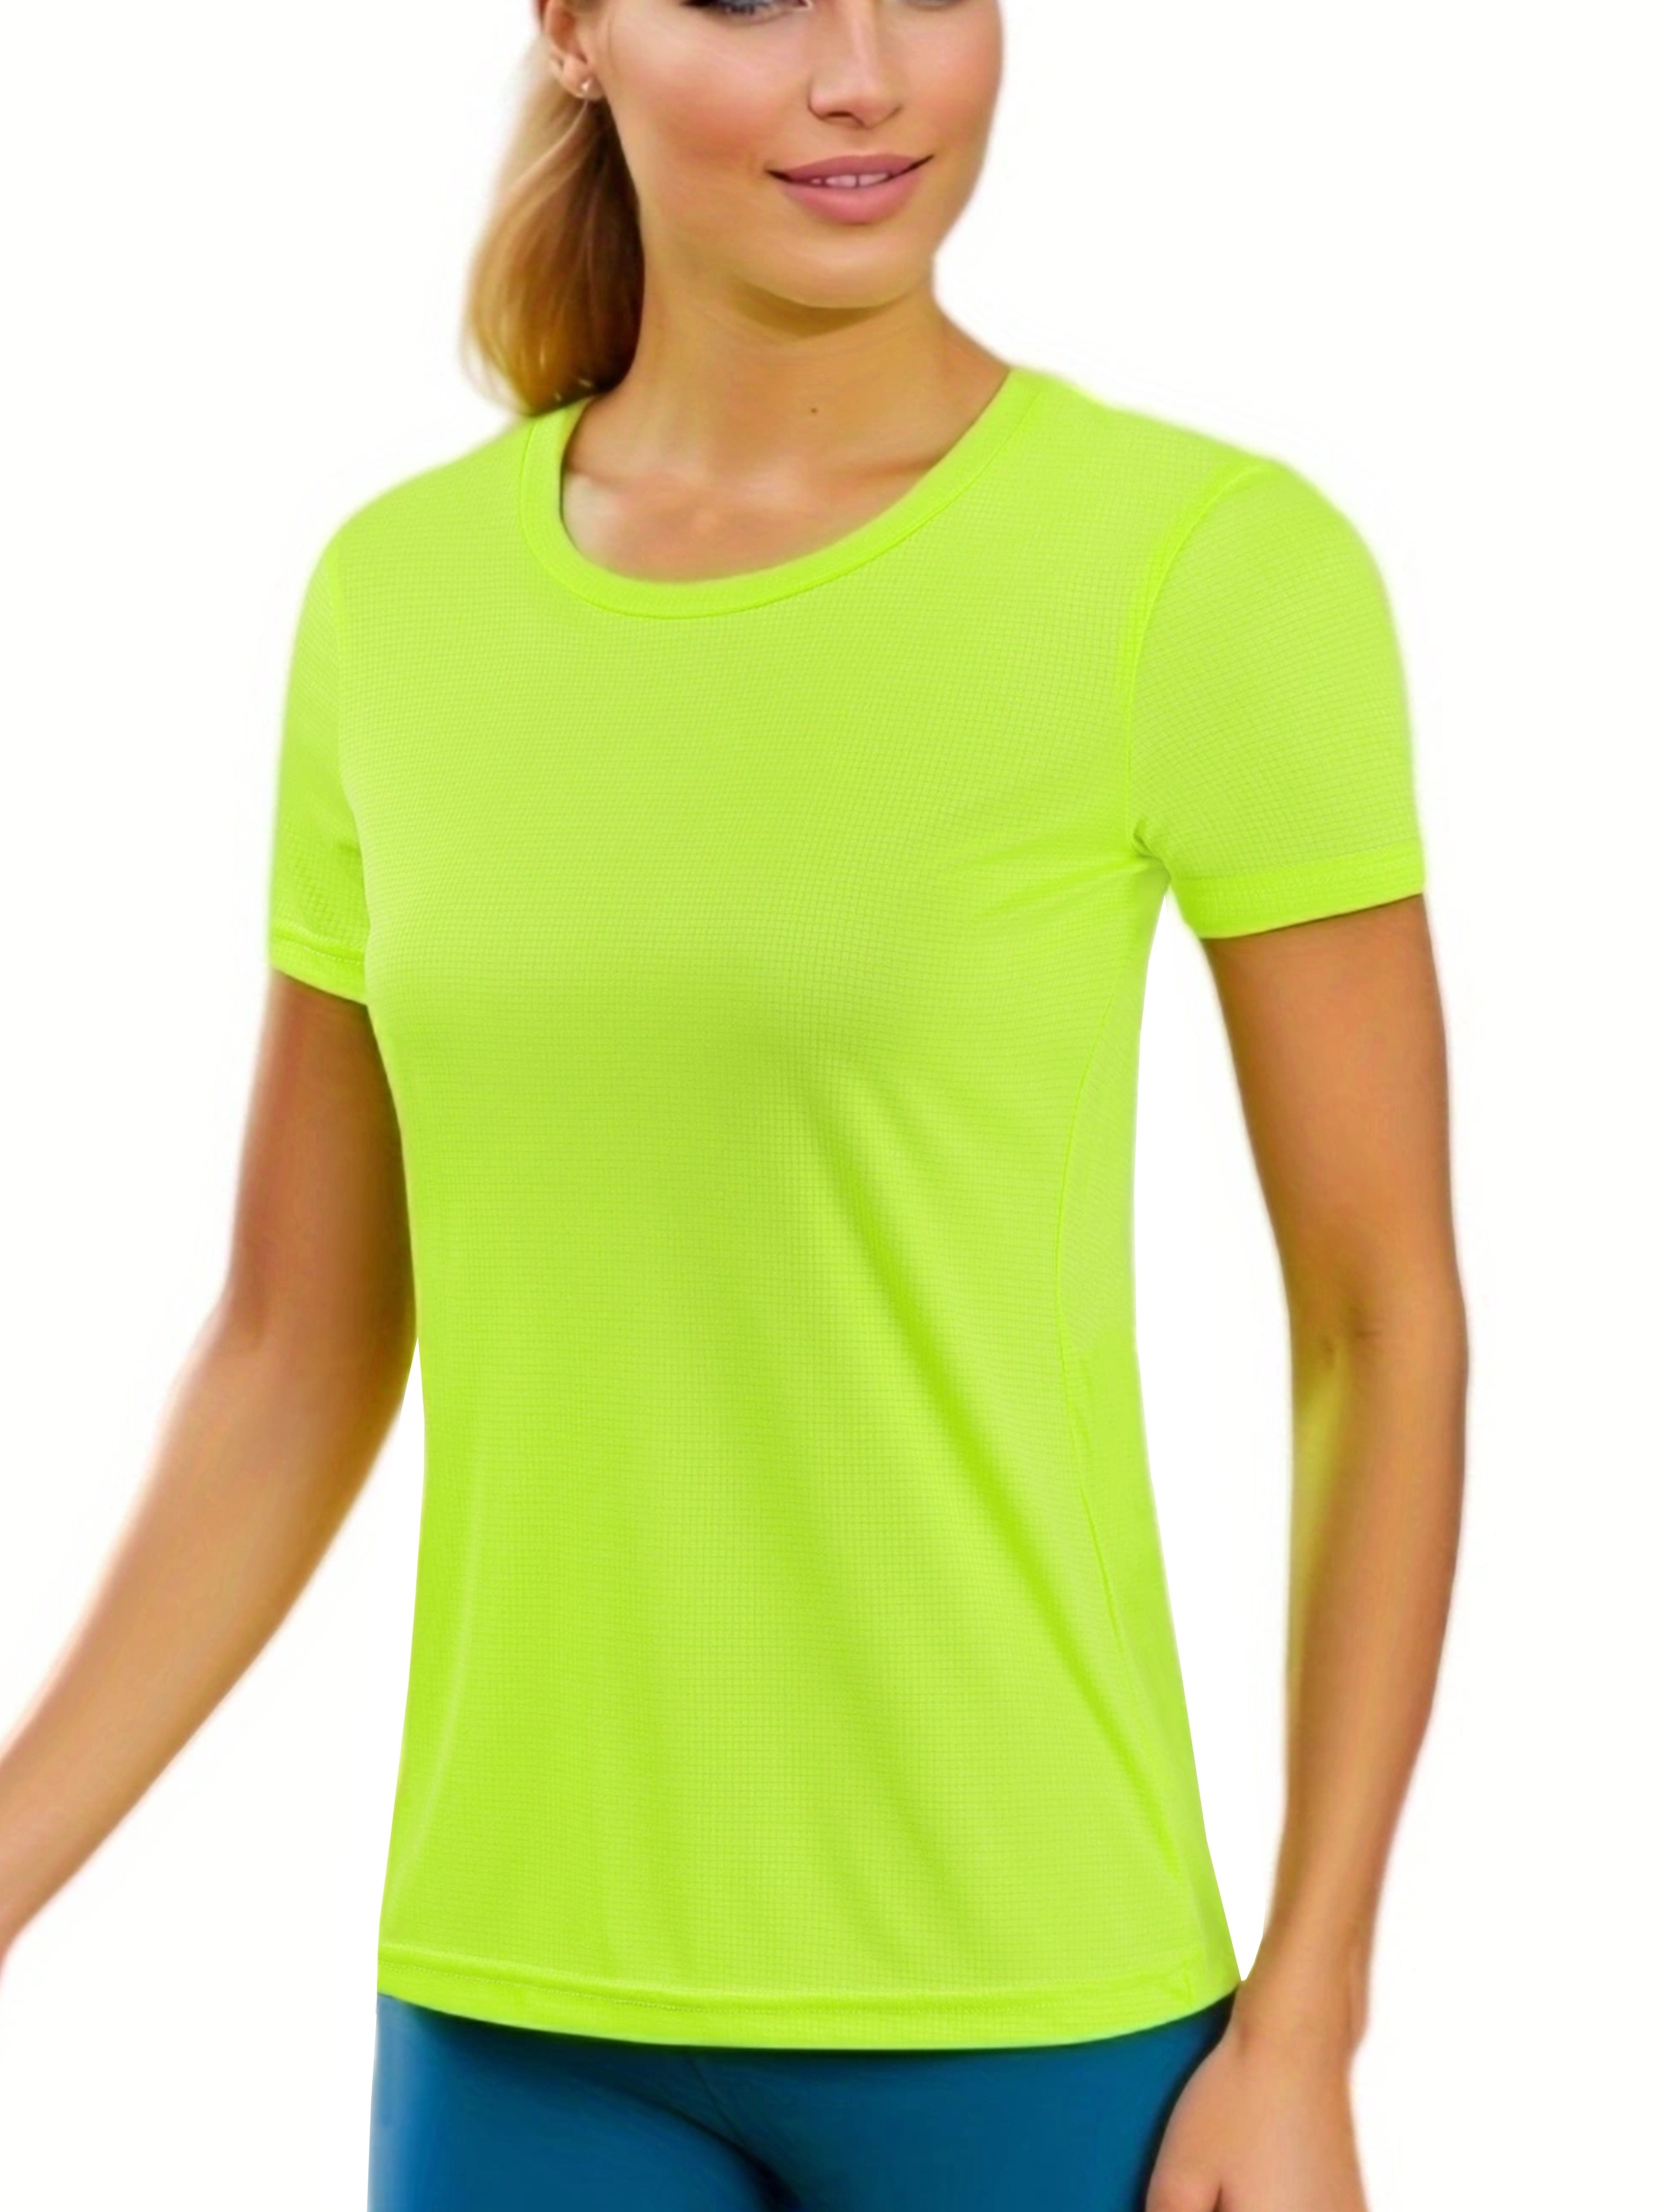 Sports T-shirts Women, Workout Tops, Gym Clothing, Sportshirt